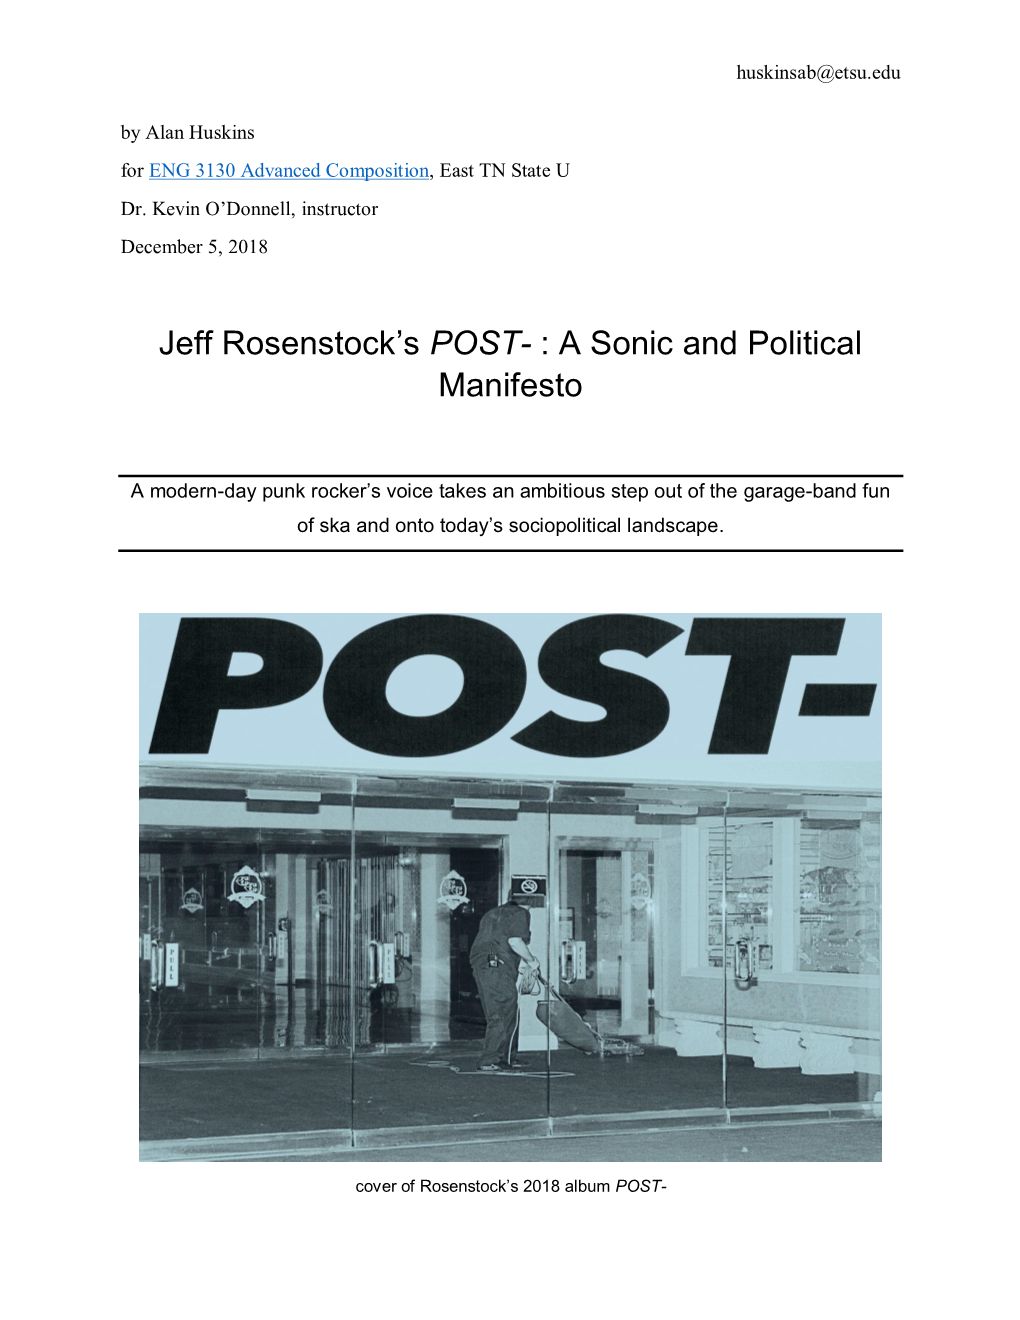 Jeff Rosenstock's POST-: a Sonic & Political Manifesto